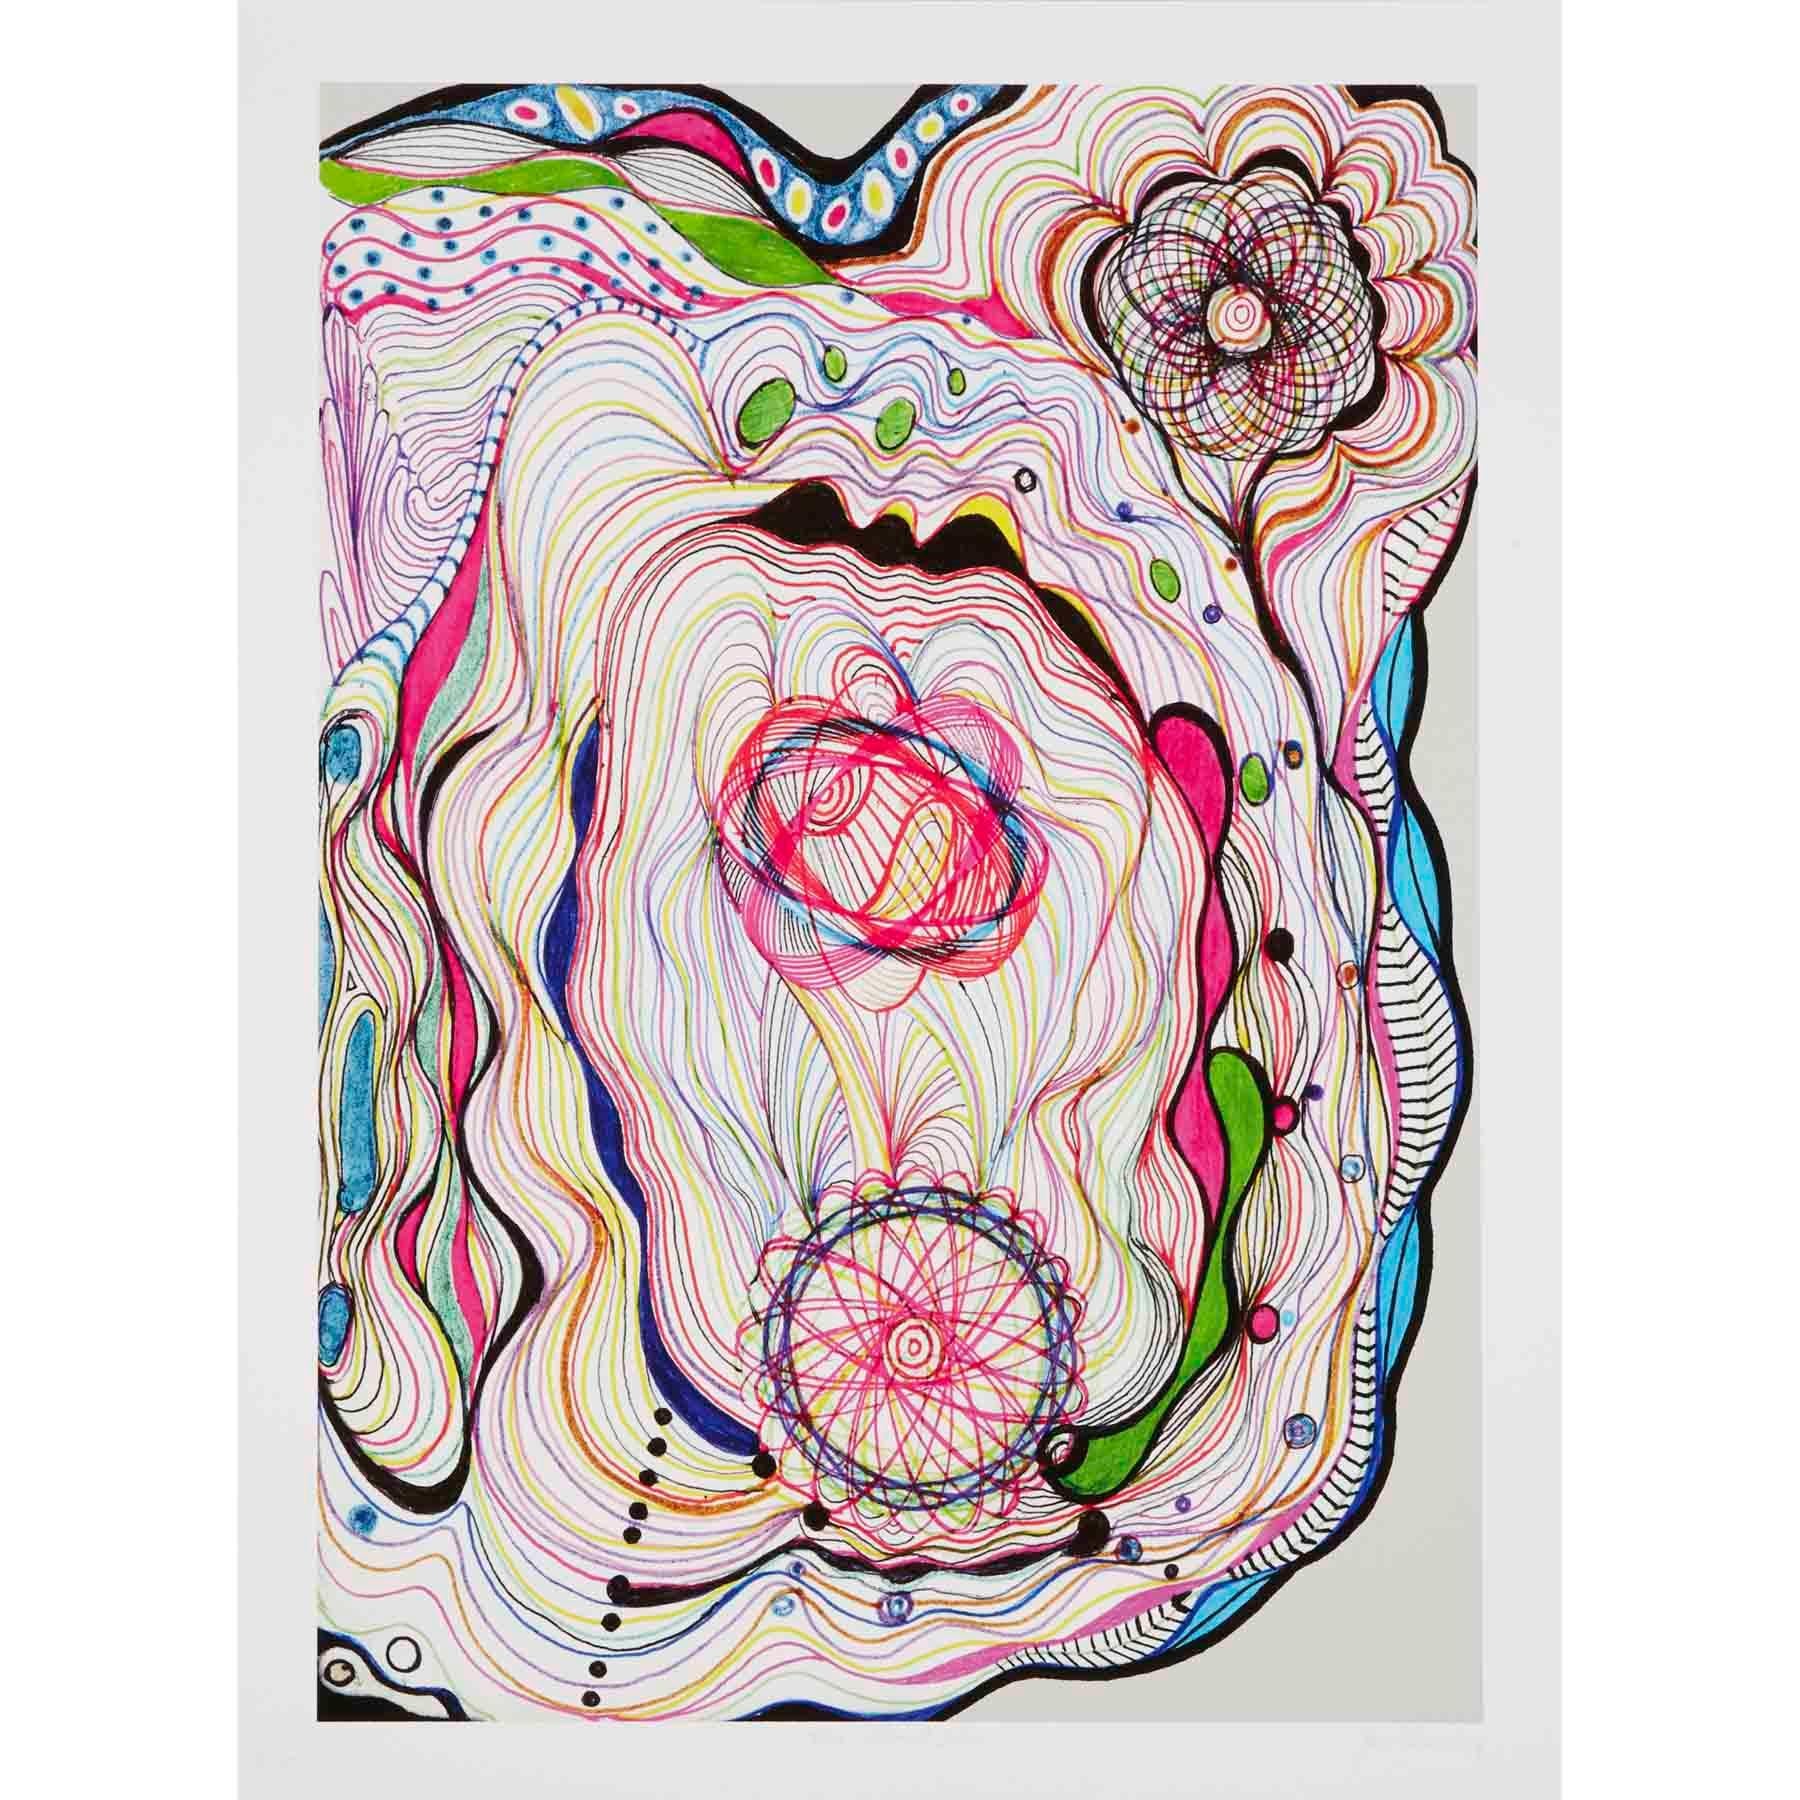 Joana Vasconcelos Abstract Print - Filament I, Contemporary, 21st Century, Pigment Print, Limited Edition, Edition